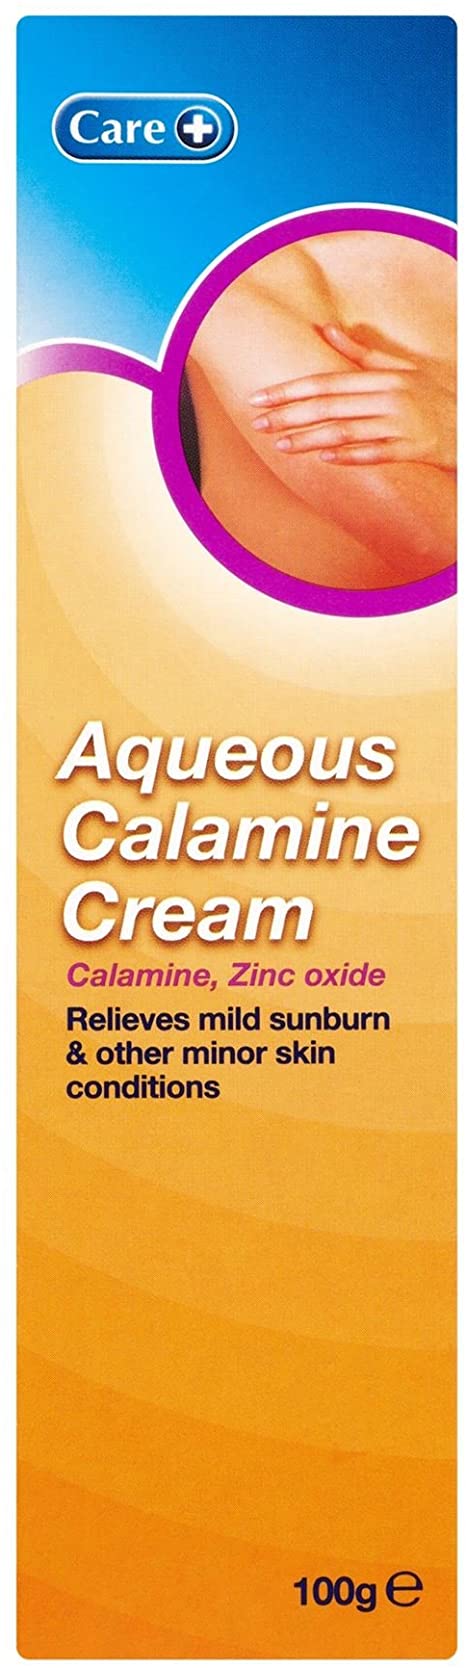 Care+ Aqueous Calamine Cream 100g